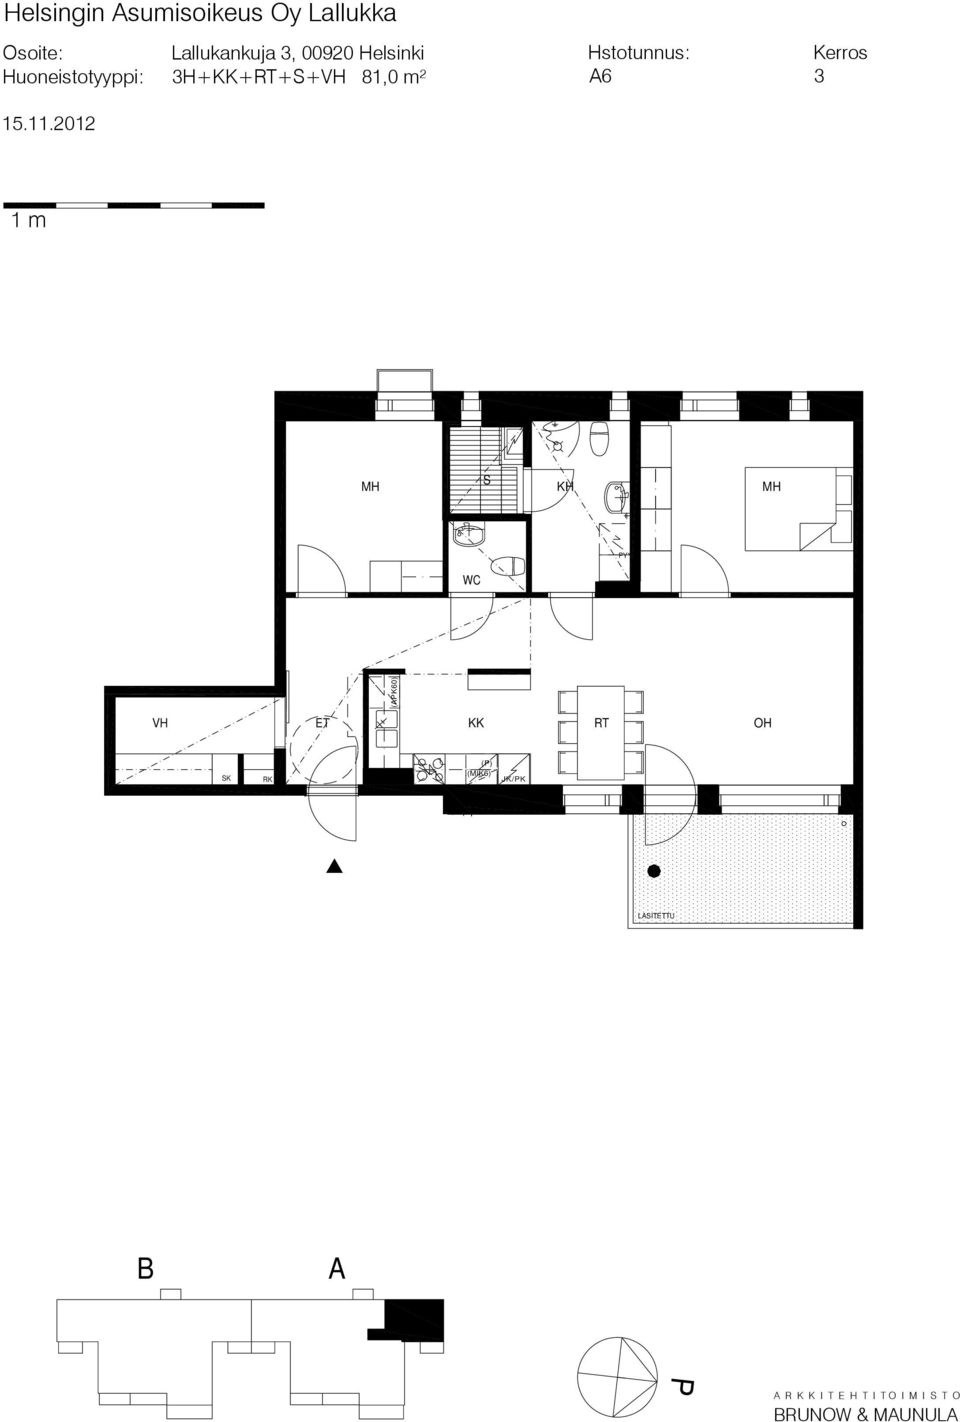 Huoneistotyyppi: 3H++++ 81,0 m² 6 3